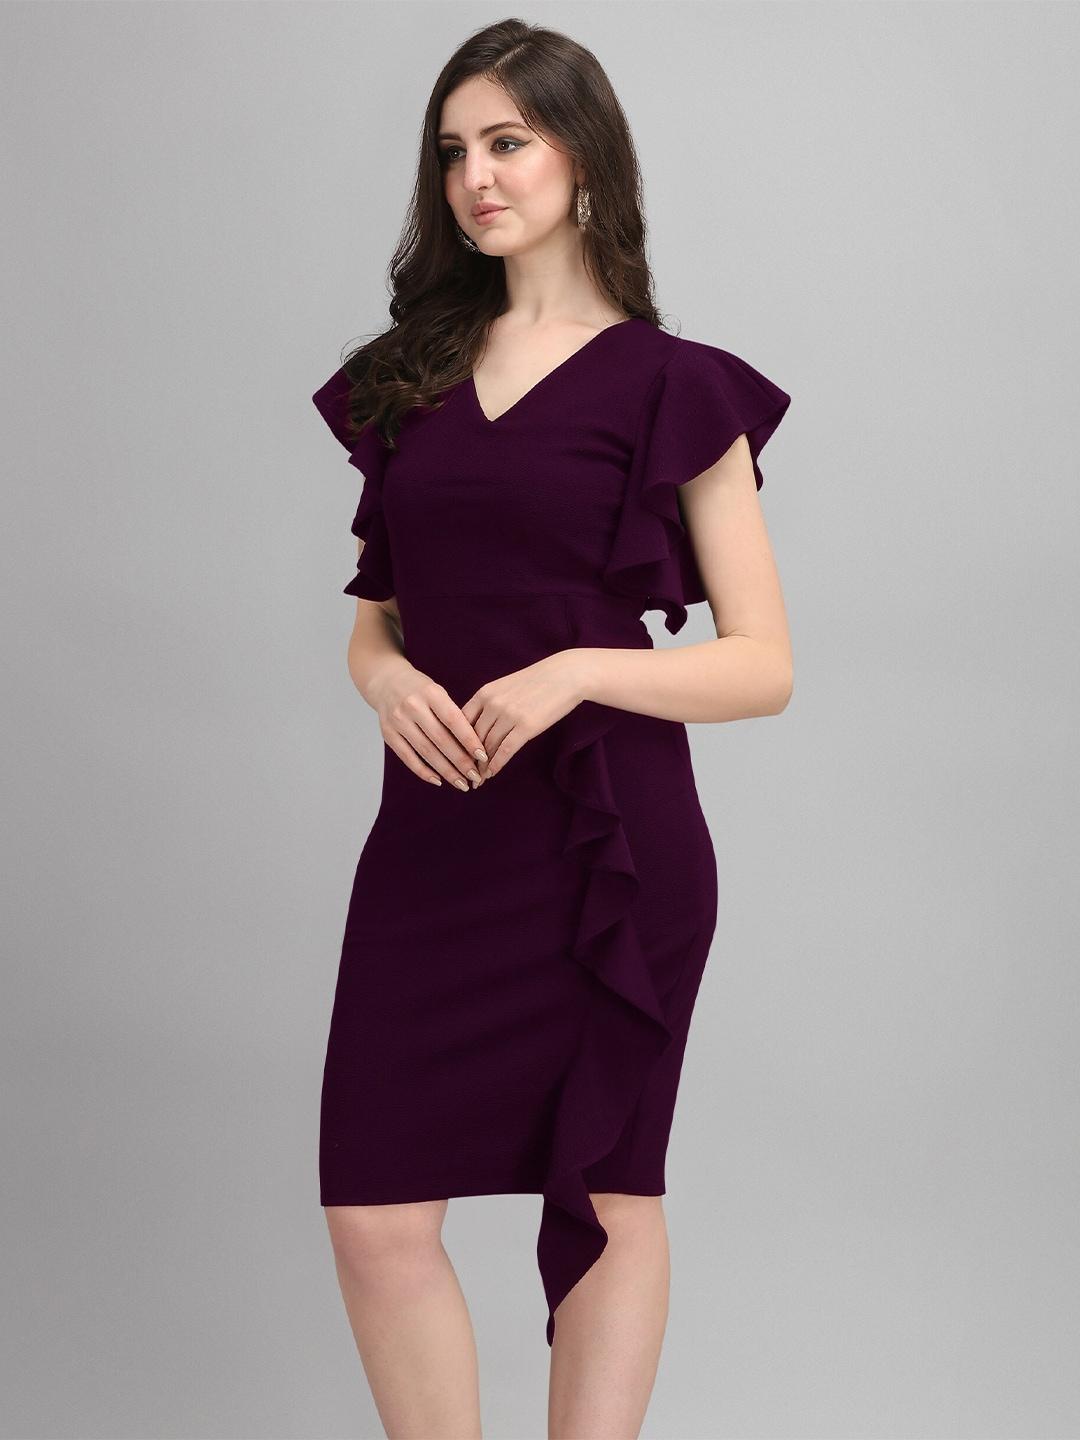 sheetal associates women purple formal a-line dress